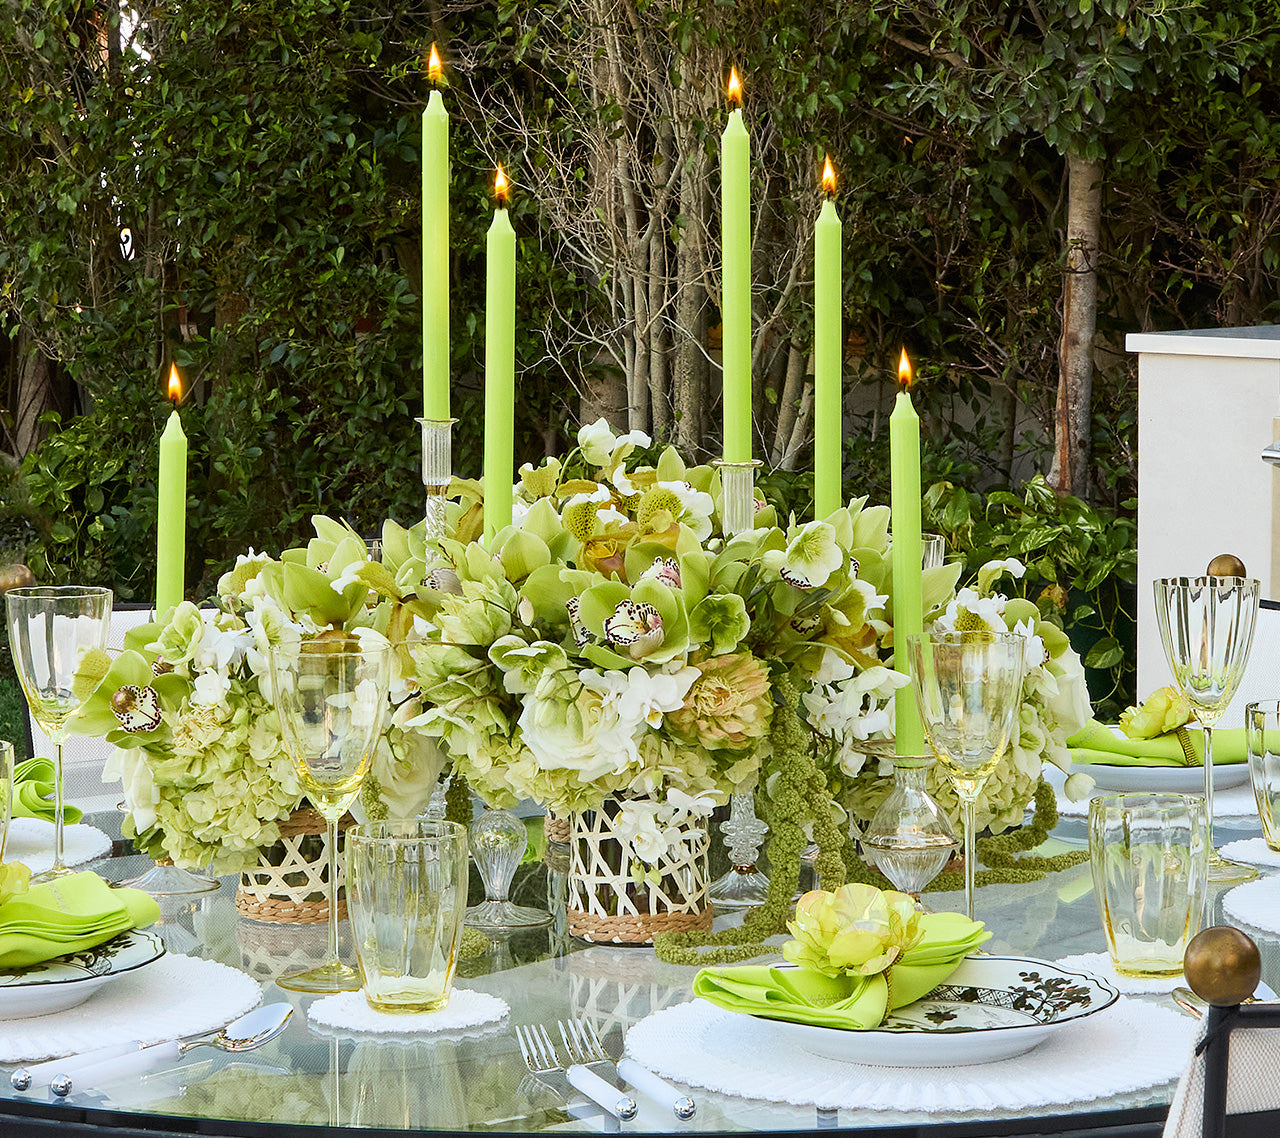 Kim Seybert Luxury Gardenia Napkin Ring in Citron